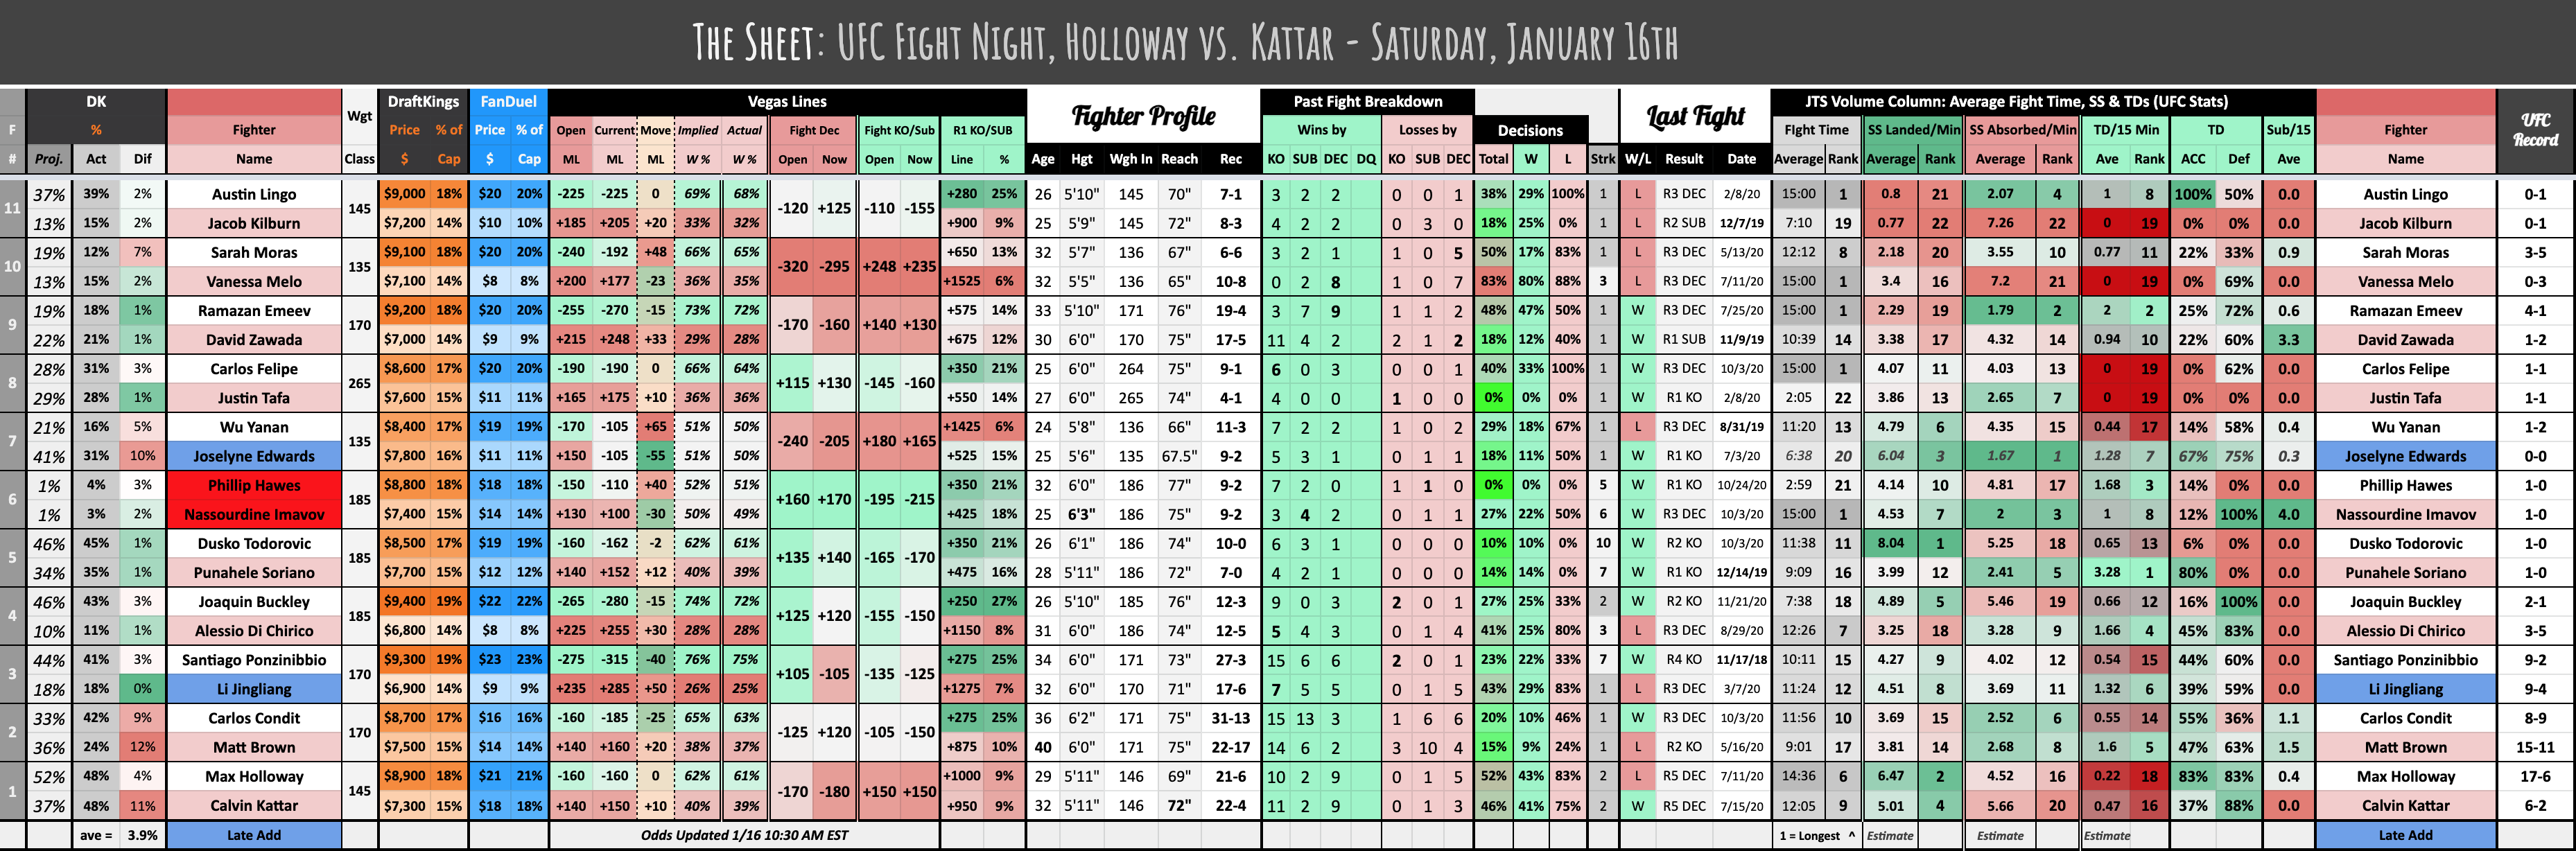 The Sheet: UFC Fight Night, Holloway vs. Kattar - Saturday, January 16th